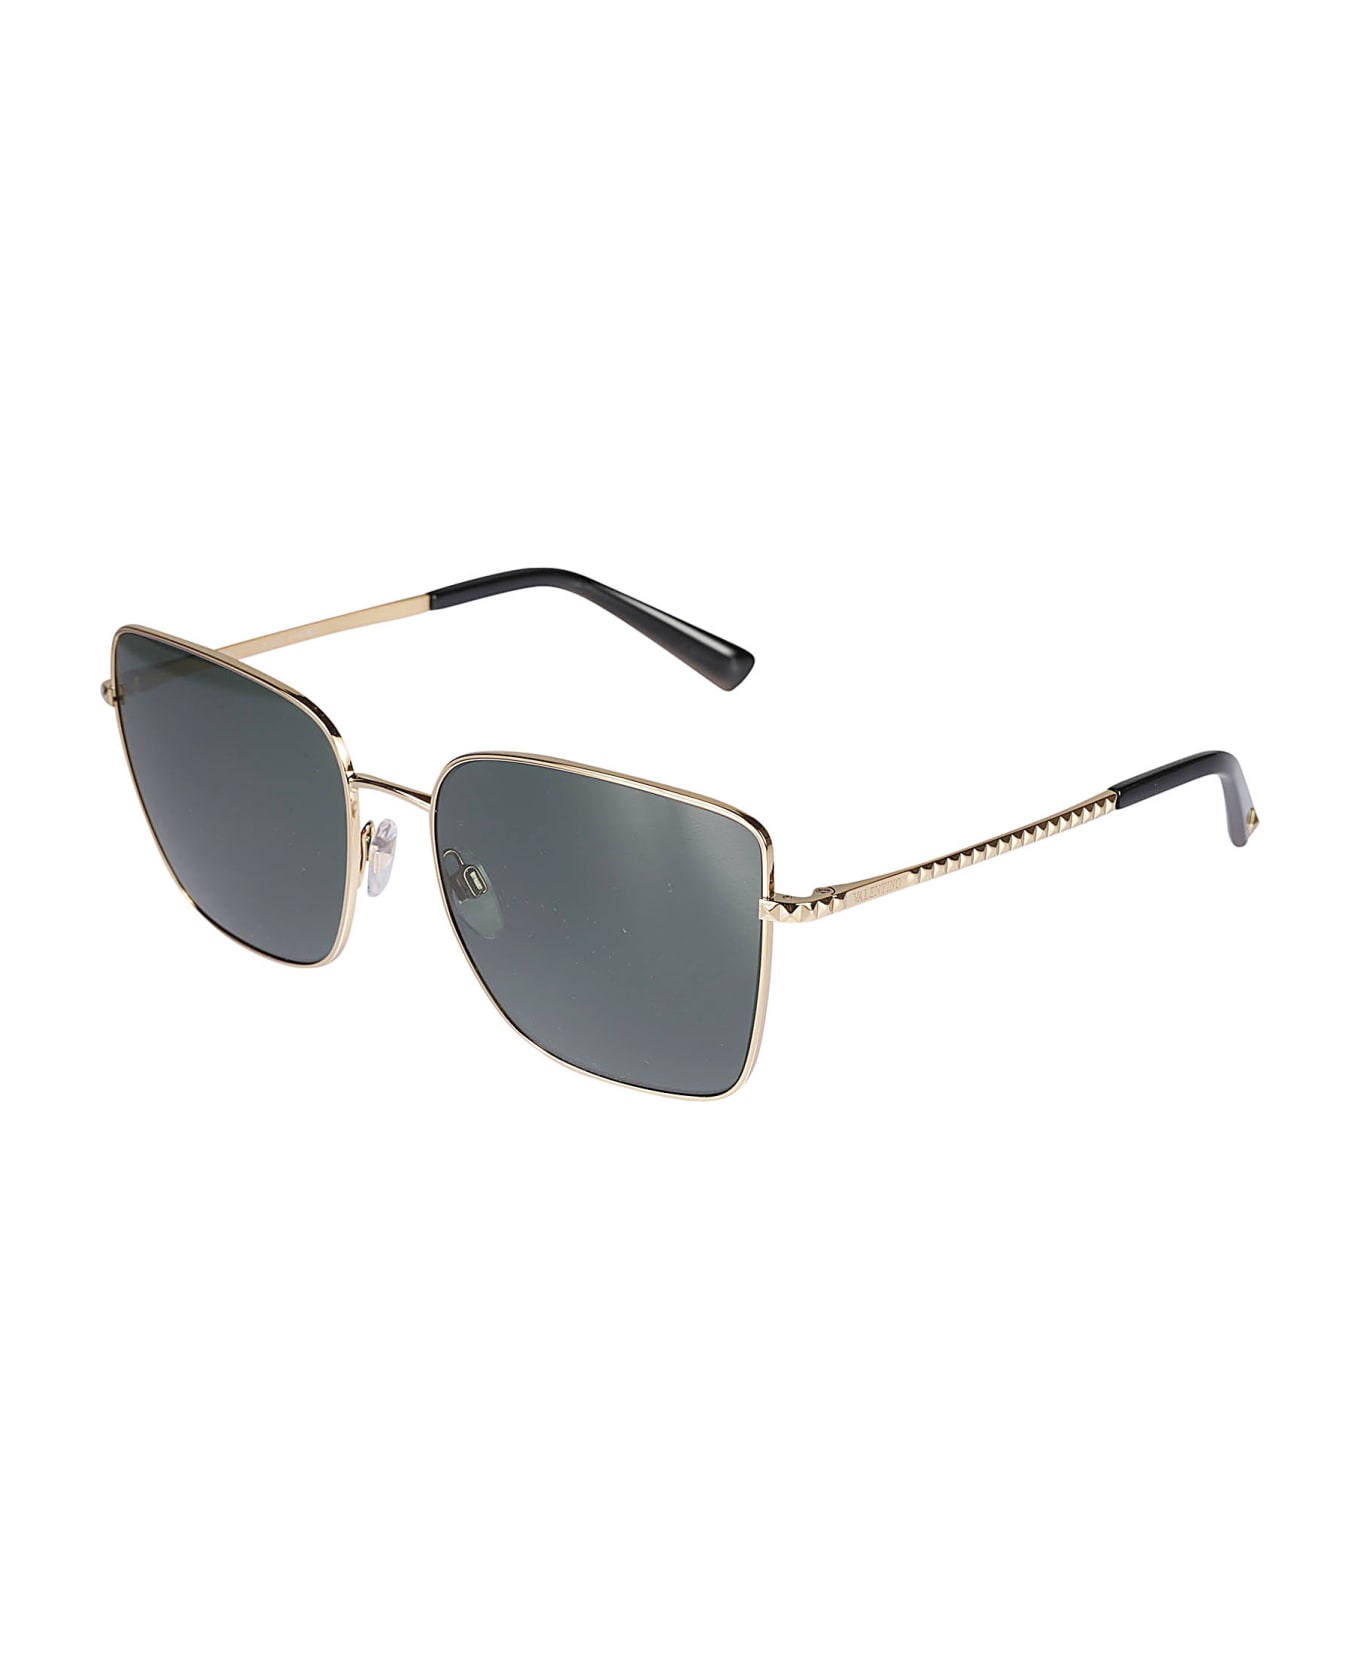 Valentino Eyewear Sole300271 Sunglasses - 300271